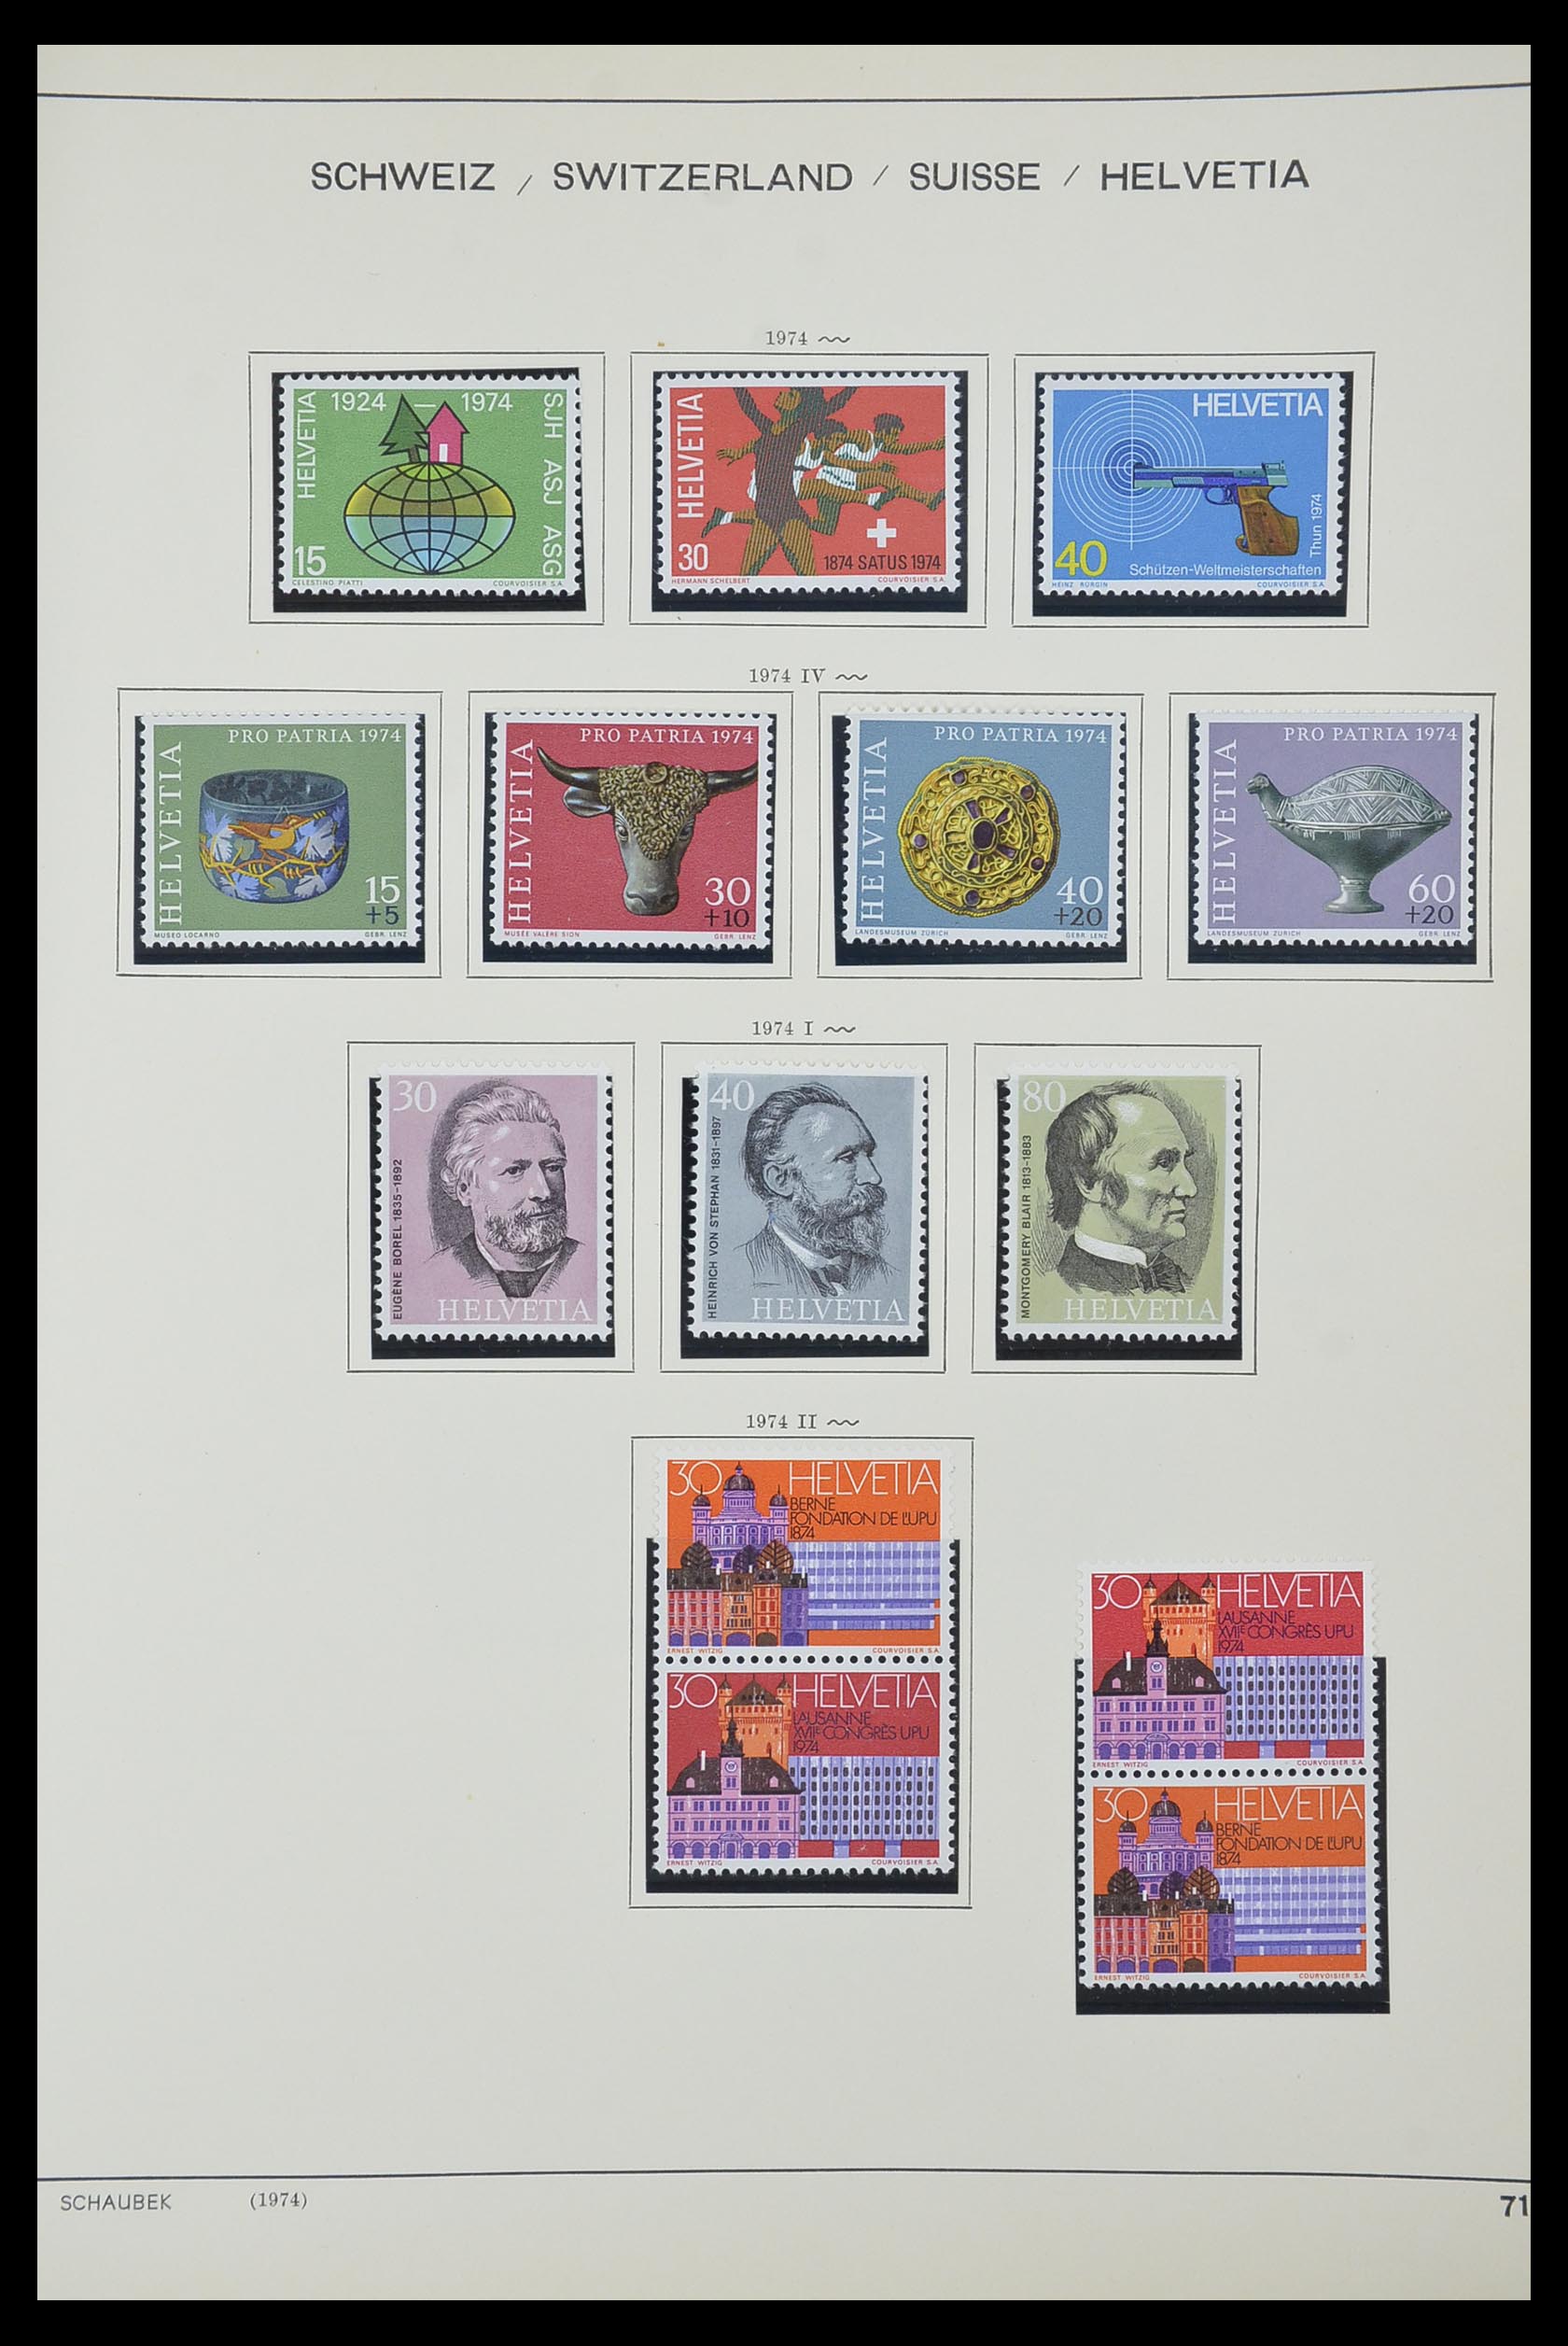 33601 057 - Stamp collection 33601 Switzerland 1854-1985.